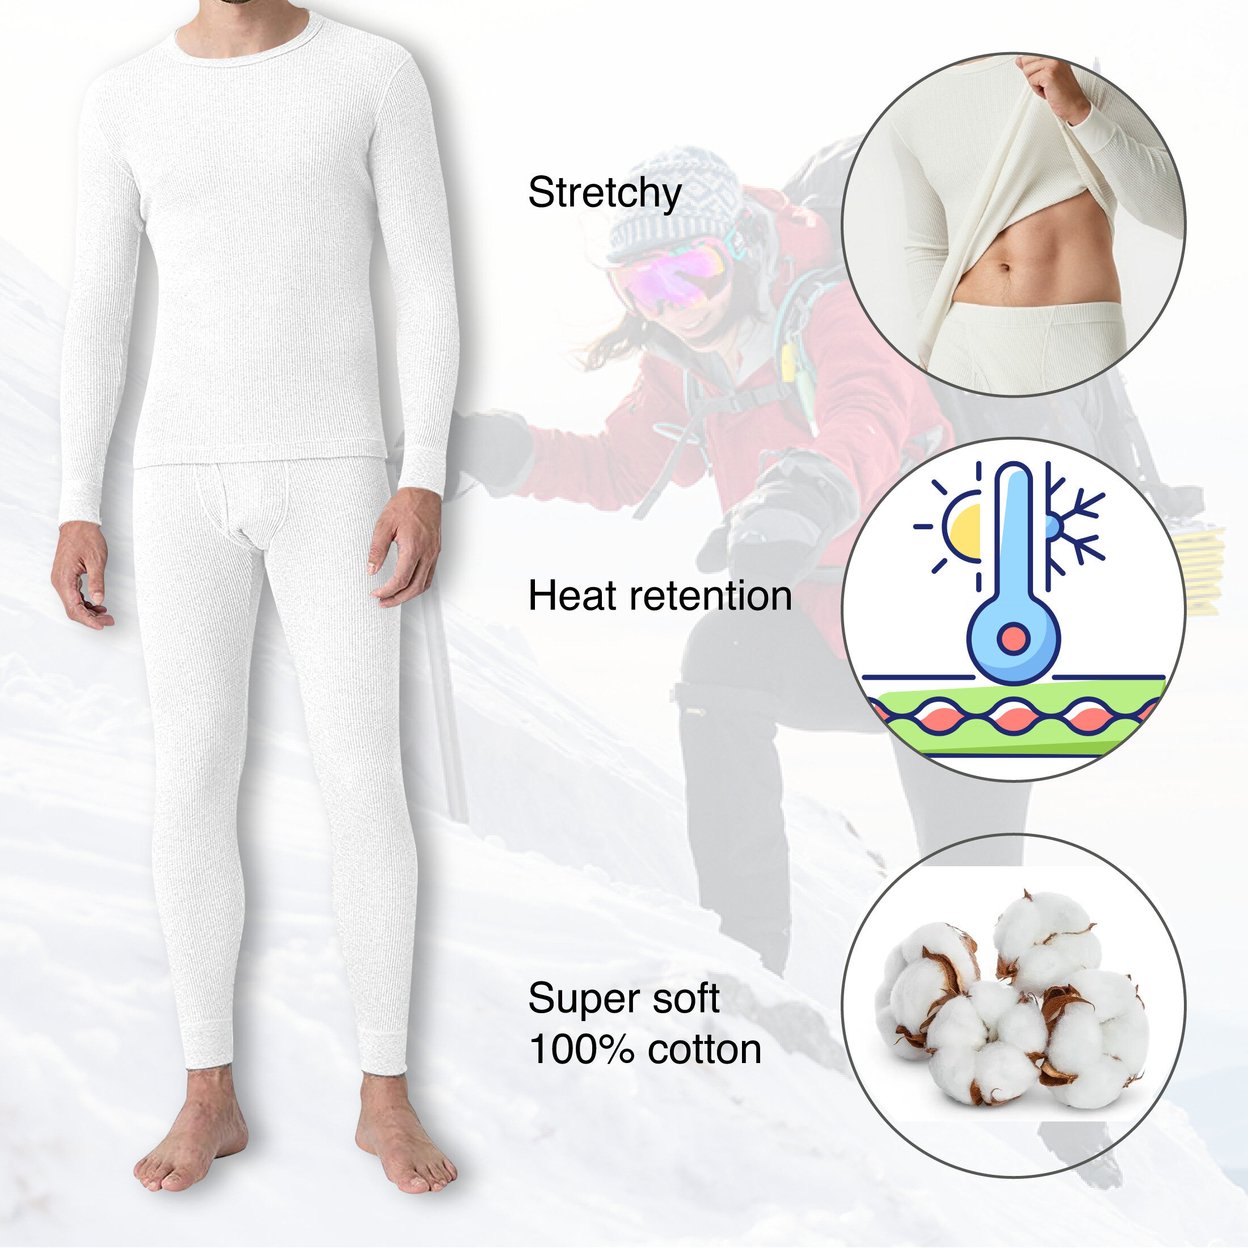 Multi-Set: Men's Super-Soft Cotton Waffle Knit Winter Thermal Underwear Set - 2-pack, X-large